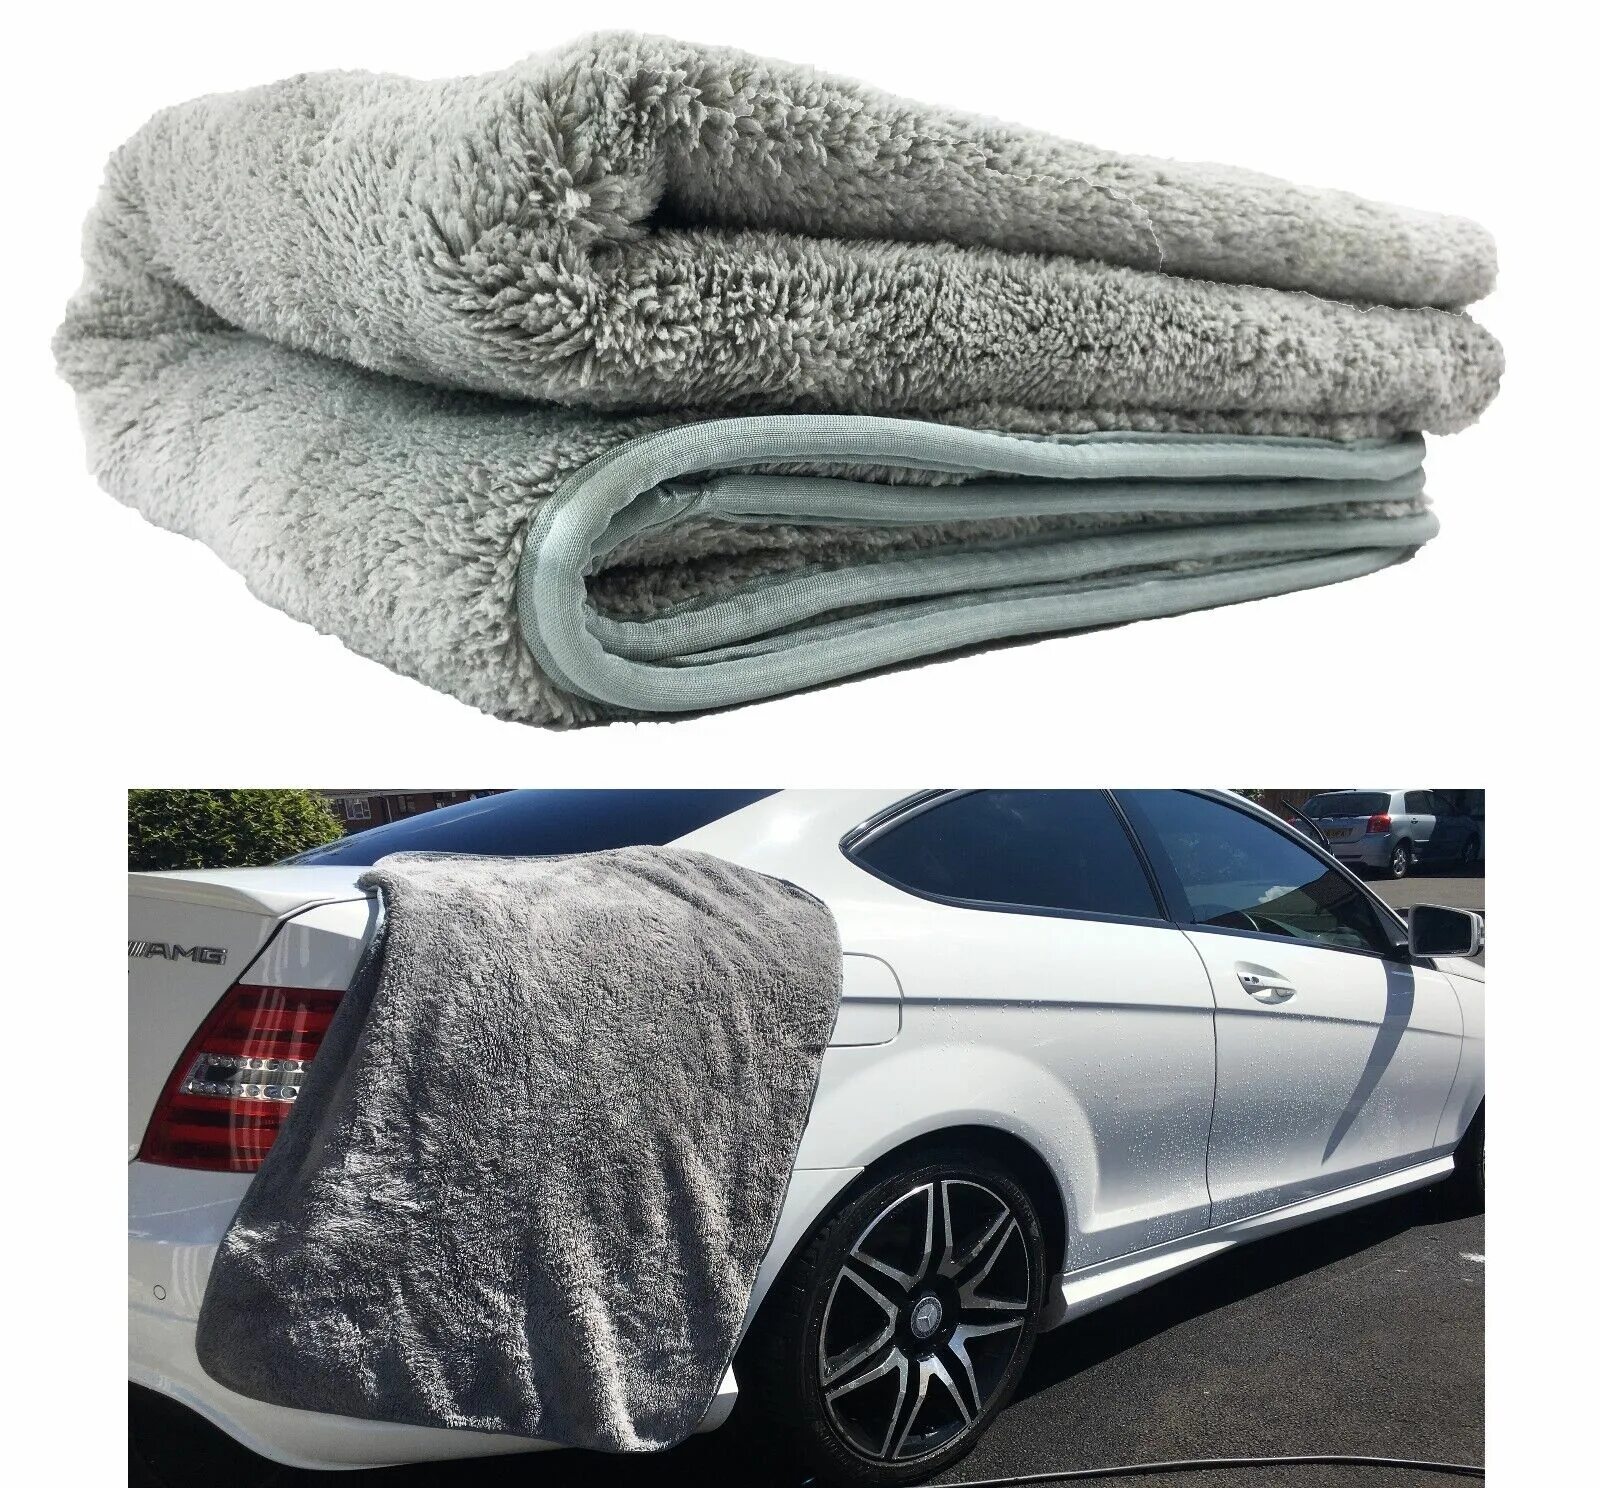 Полотенце для сушки авто. Тряпка фибра для авто. Микрофибра для авто. Полотенце для автомобиля. Полотенце для сушки автомобиля.